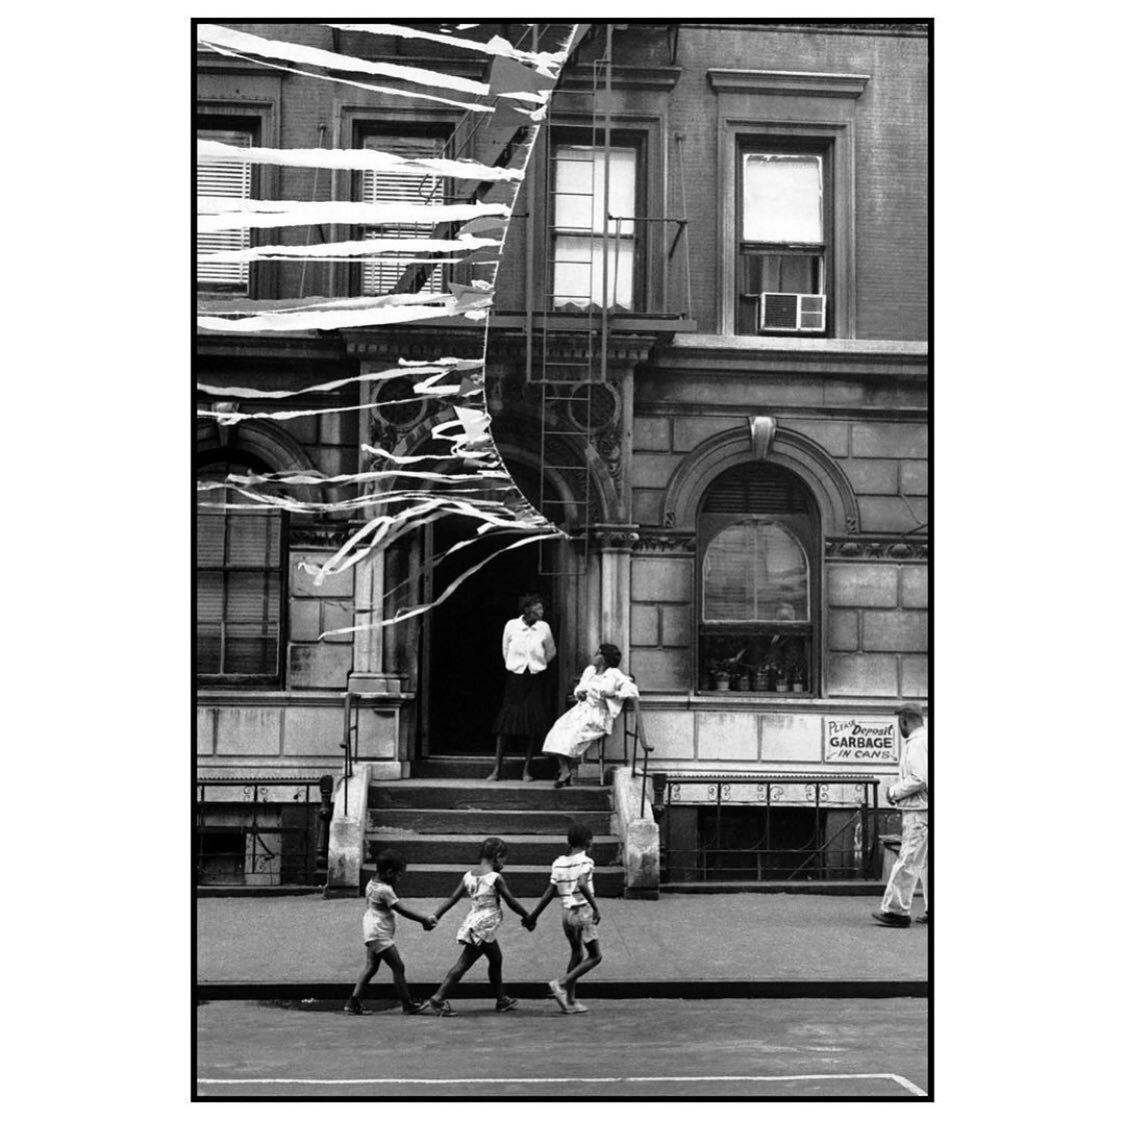 -
PHOTO: Street scene, children walk hand in hand. Harlem. NY. USA. 1963. 
. 
&copy; Leonard Freed/#MagnumPhotos
.
.
#leonardfreed #documentary #photography #photojournalism #magnum #magnumphotos #magnumphotosphotographers #magnumphotoskoreaagent #eu